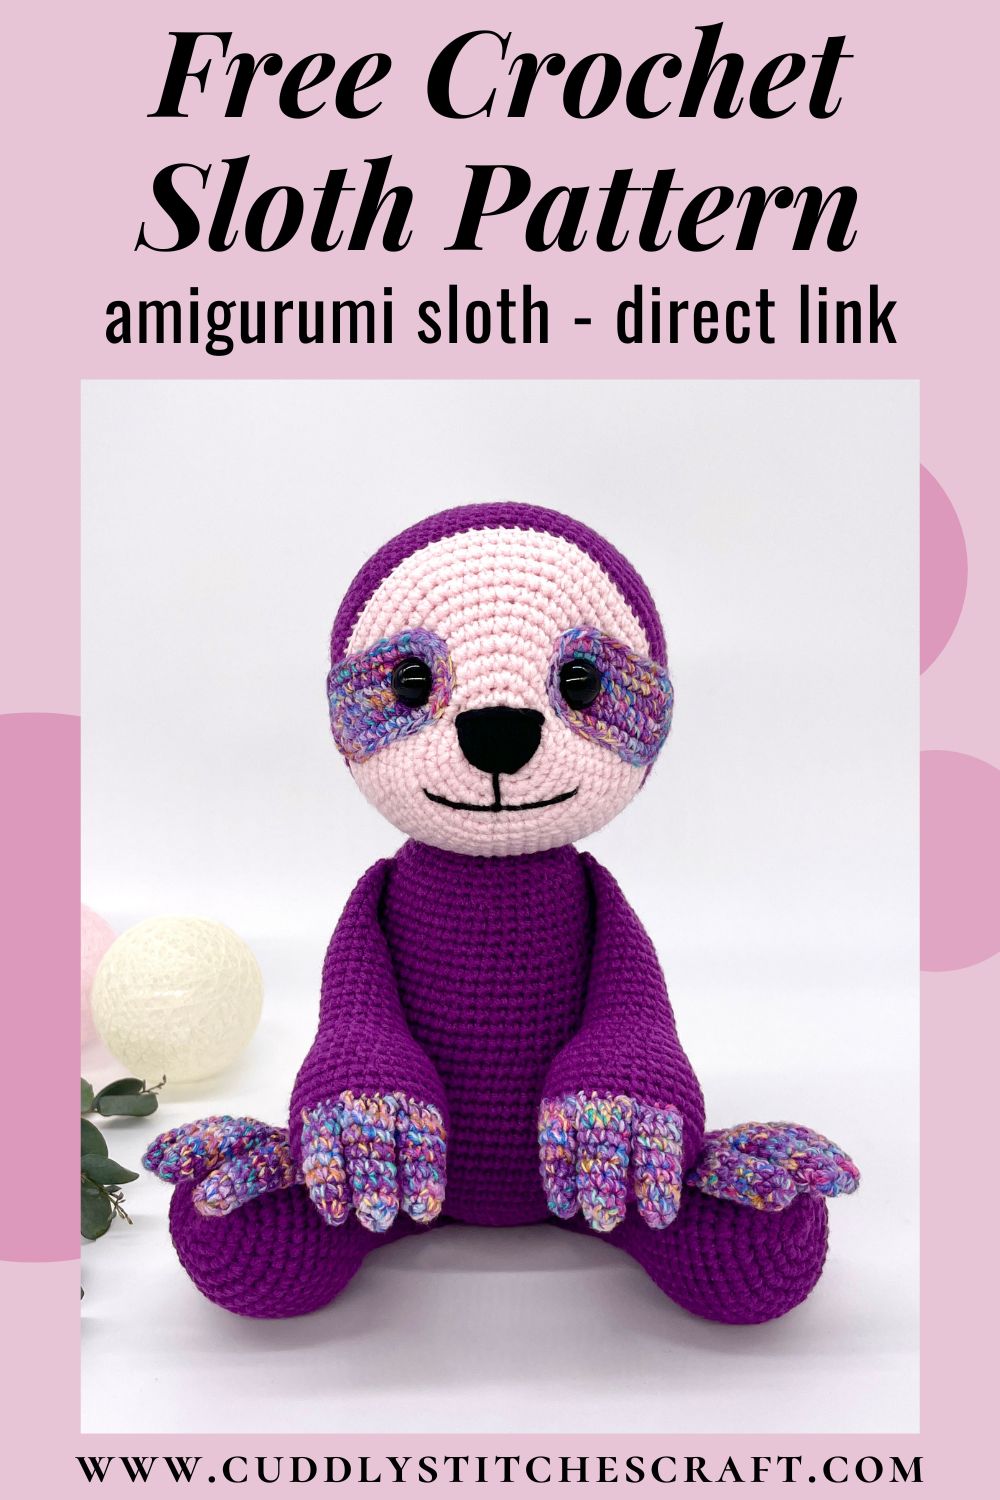 Free crochet sloth pattern, free Amigurumi sloth pattern by Cuddly Stitches Craft (2)